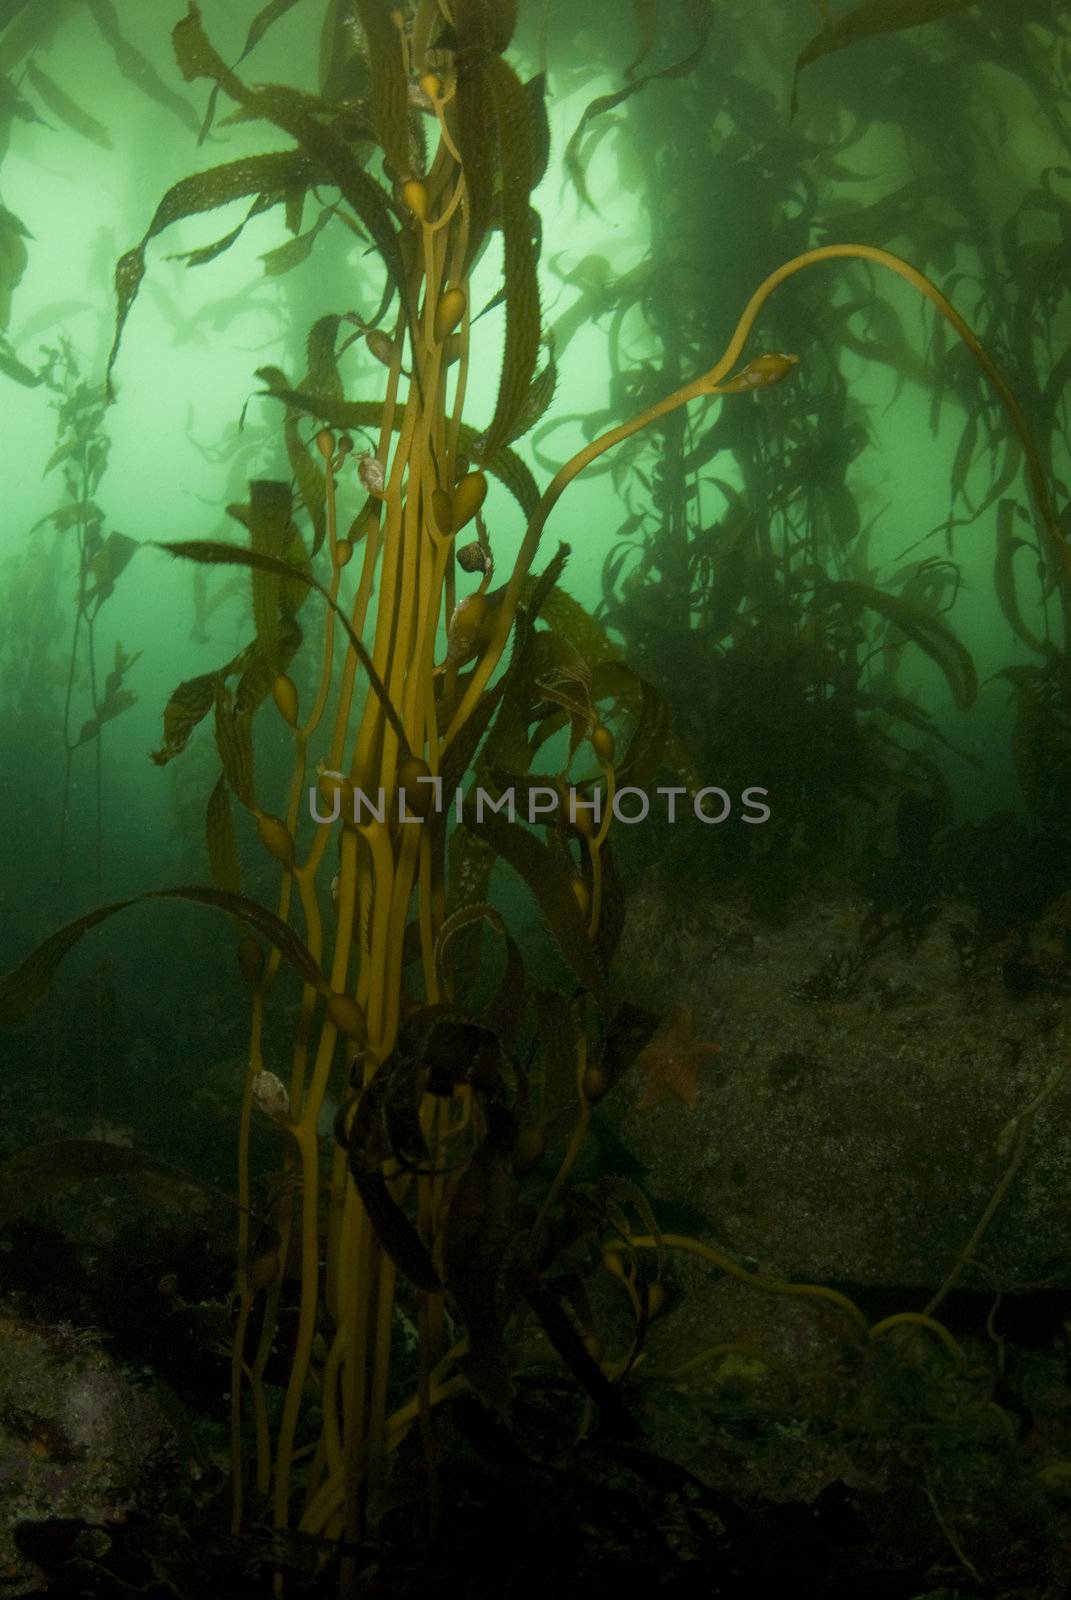 Giant Kelp Forest (Macrocystis pyrifera) underwater off California